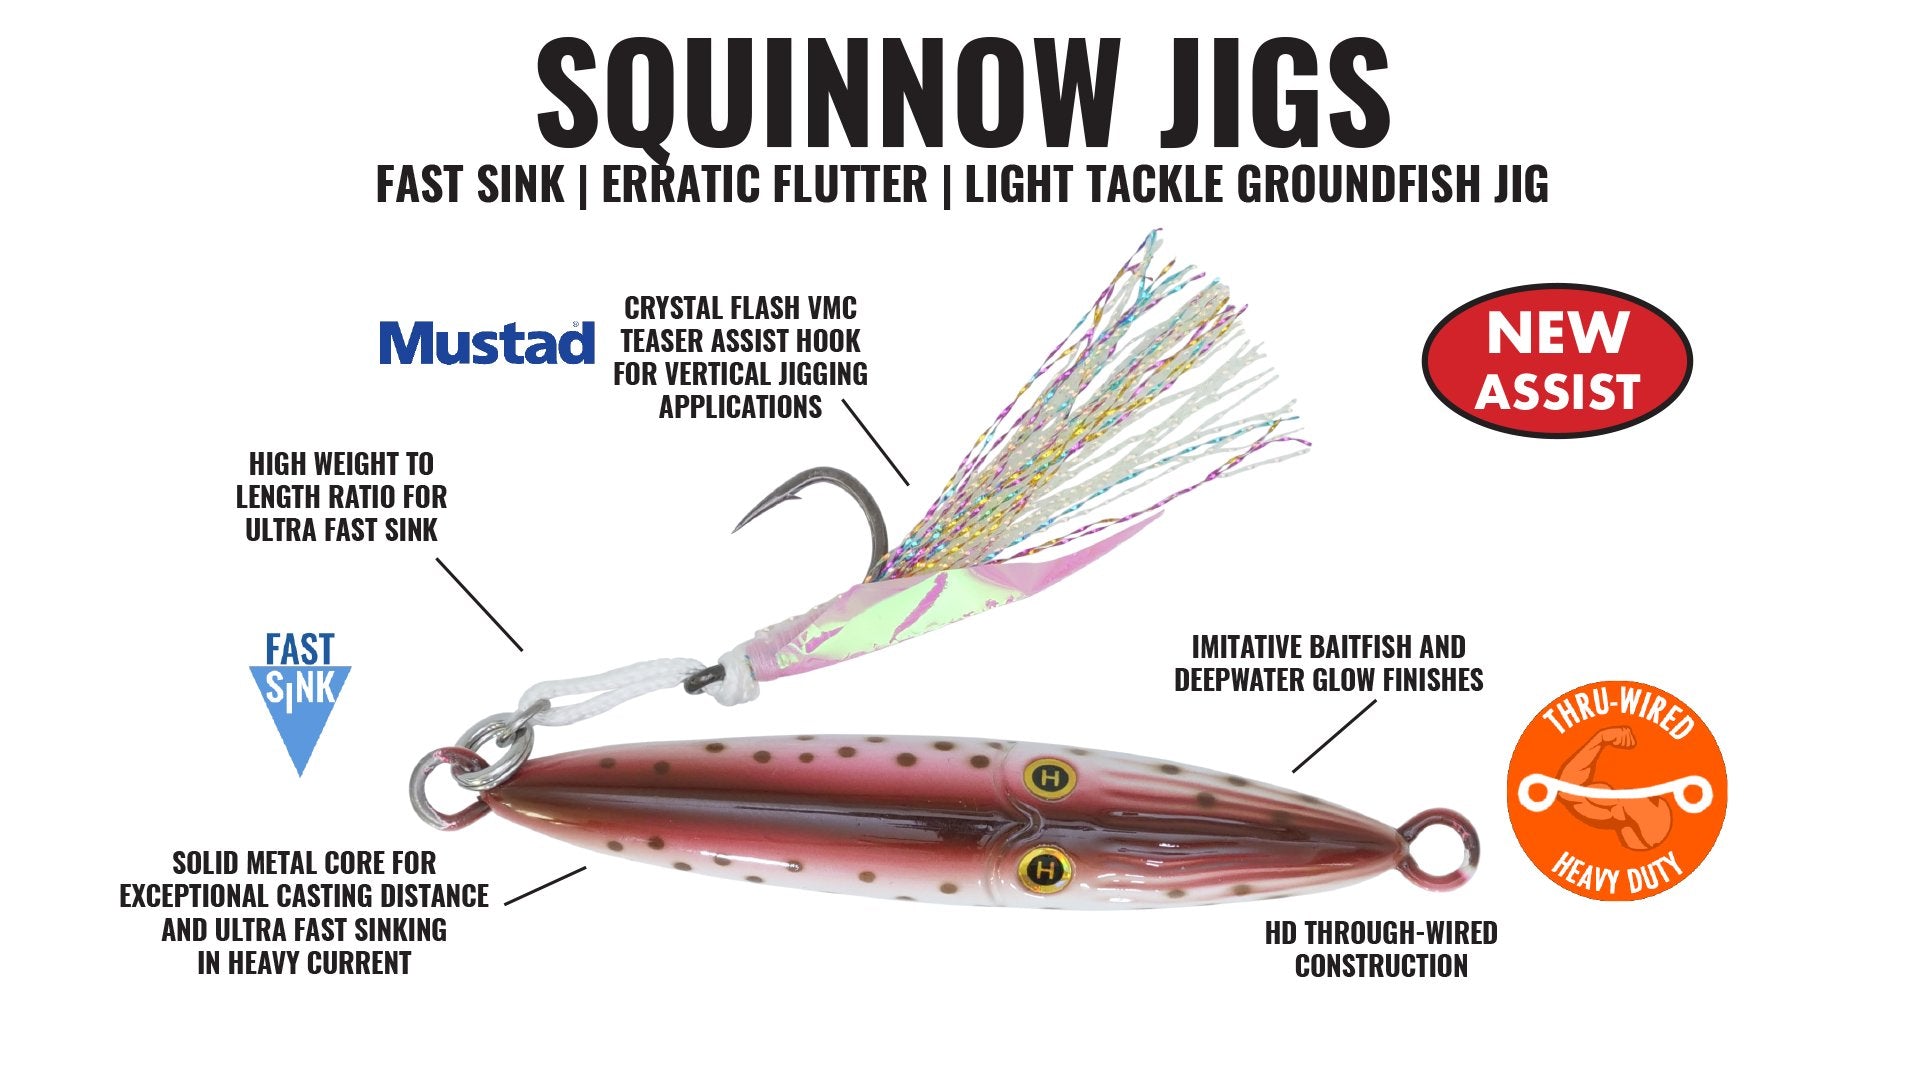 Squinnow Jigs